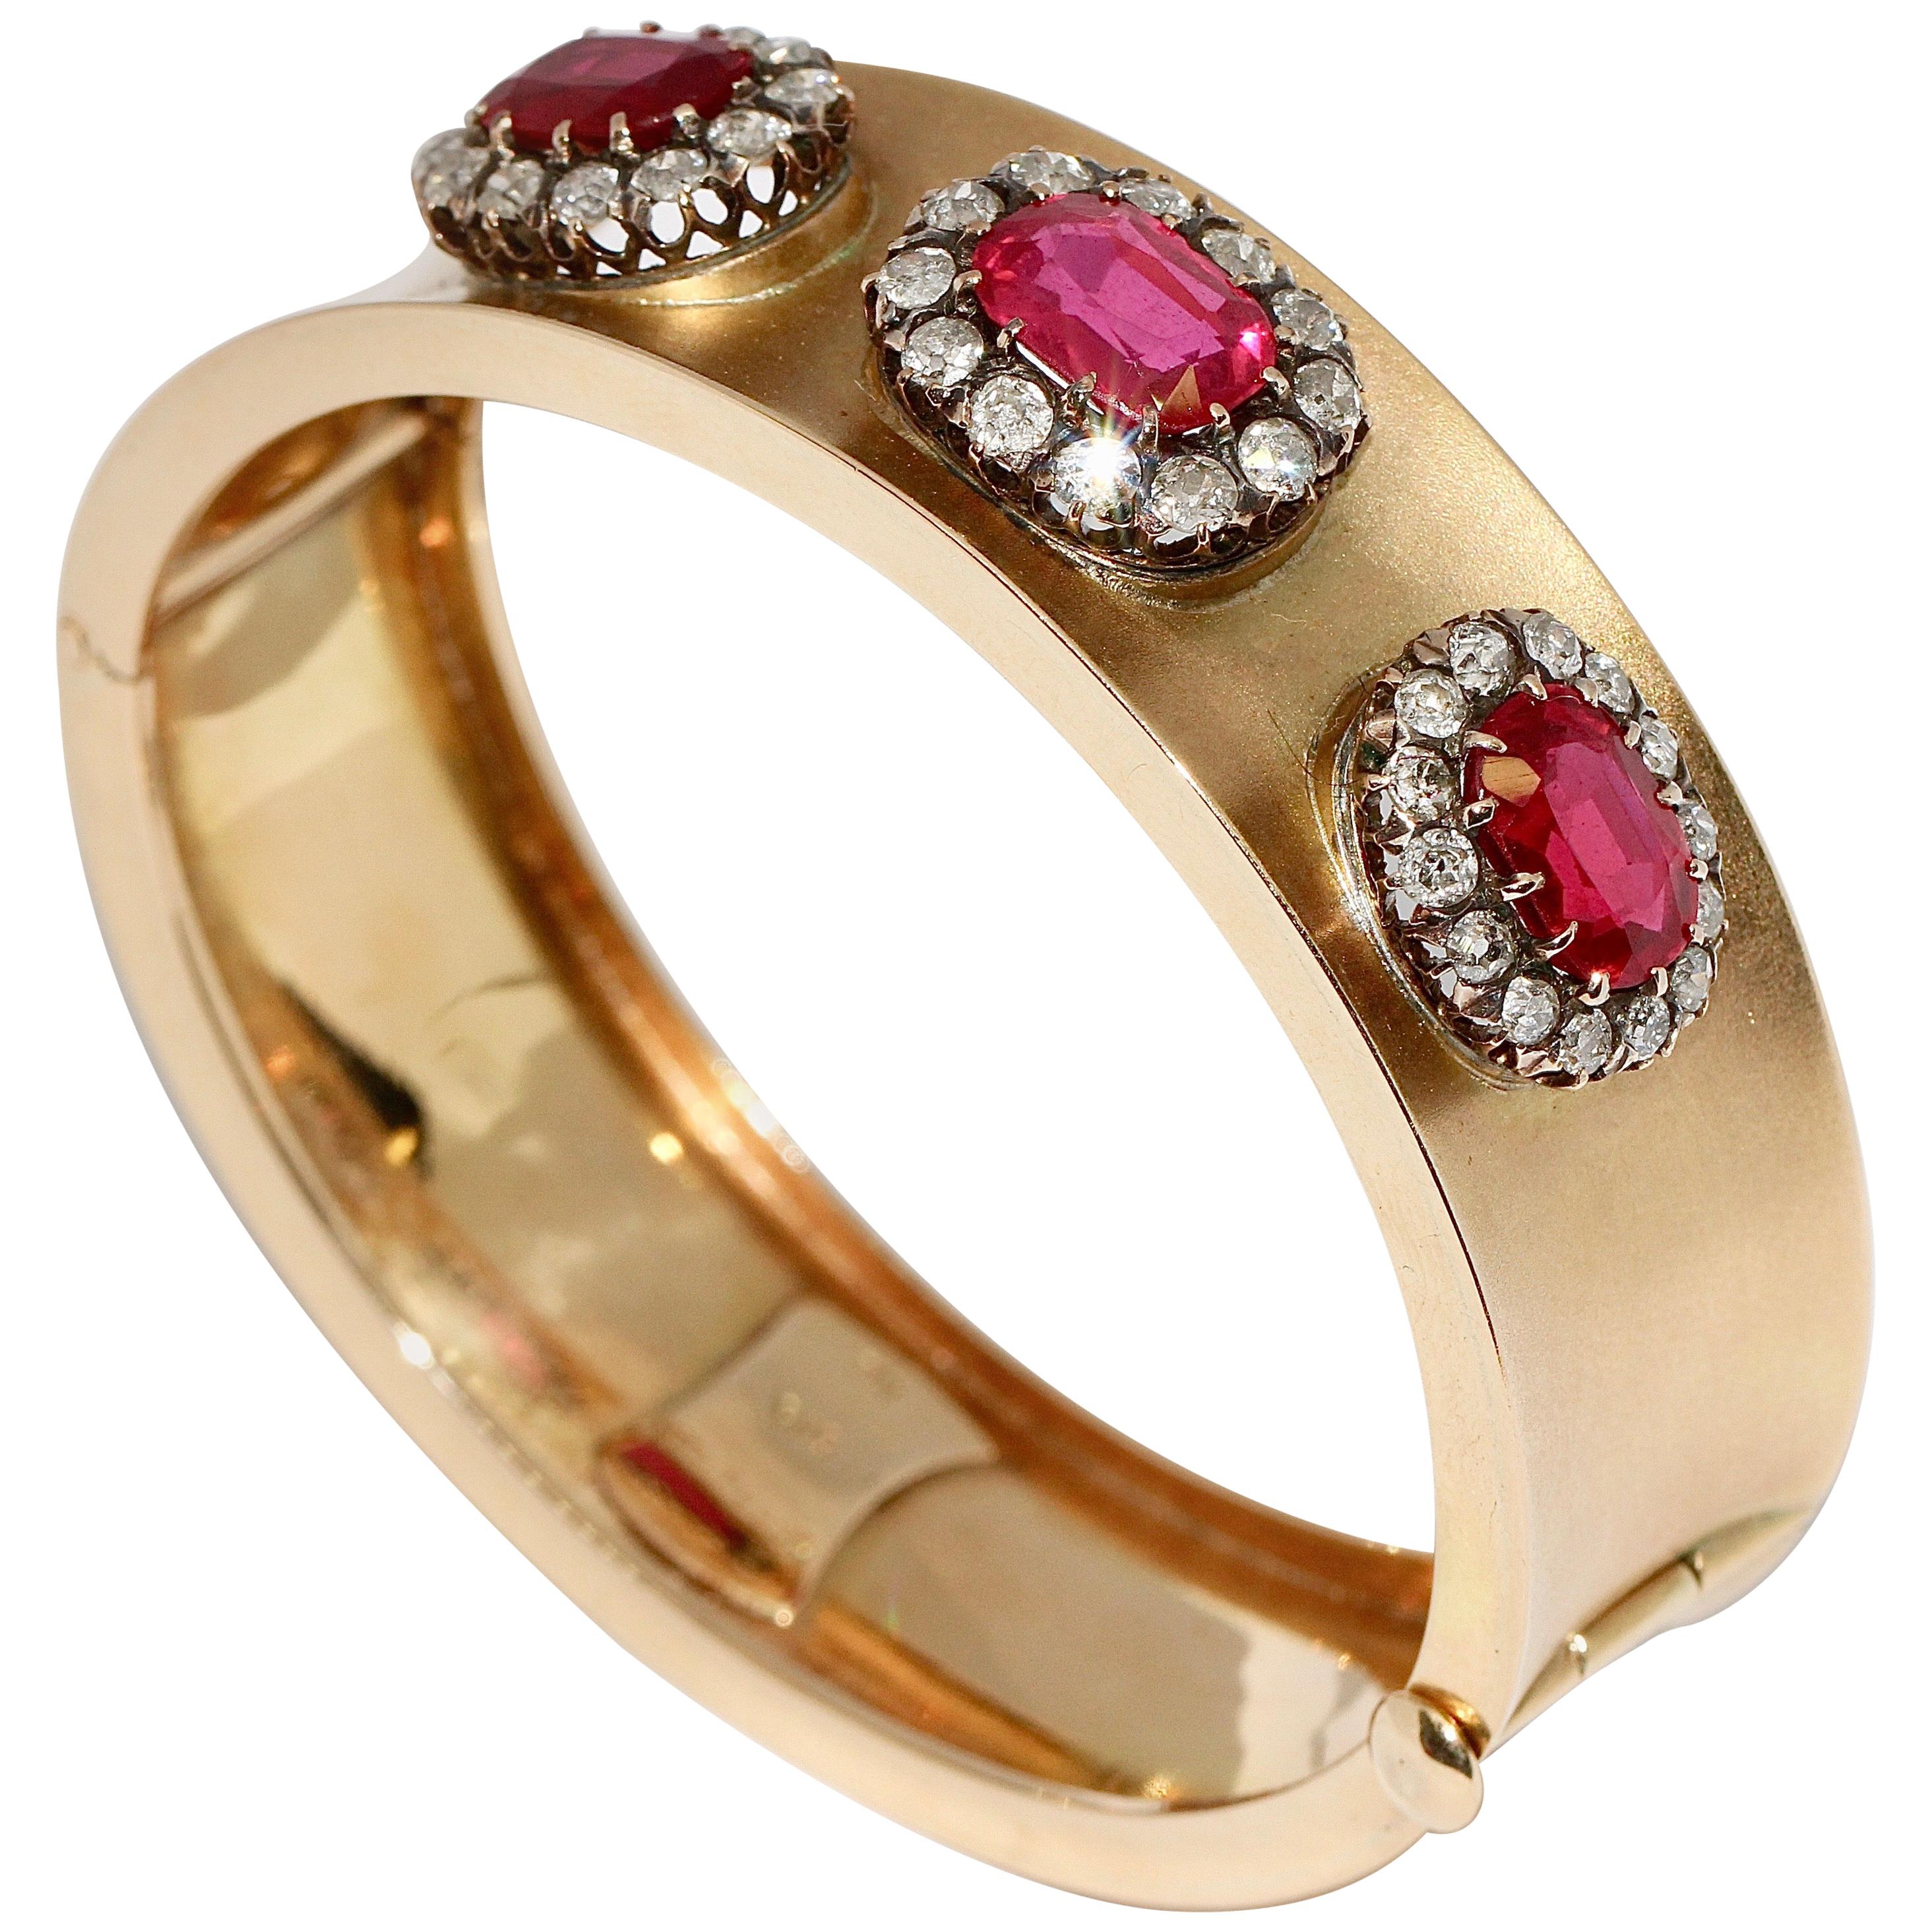 Antique Ladies Bangle, Bracelet, with Big Rubies and Diamonds, 14 Karat Gold For Sale